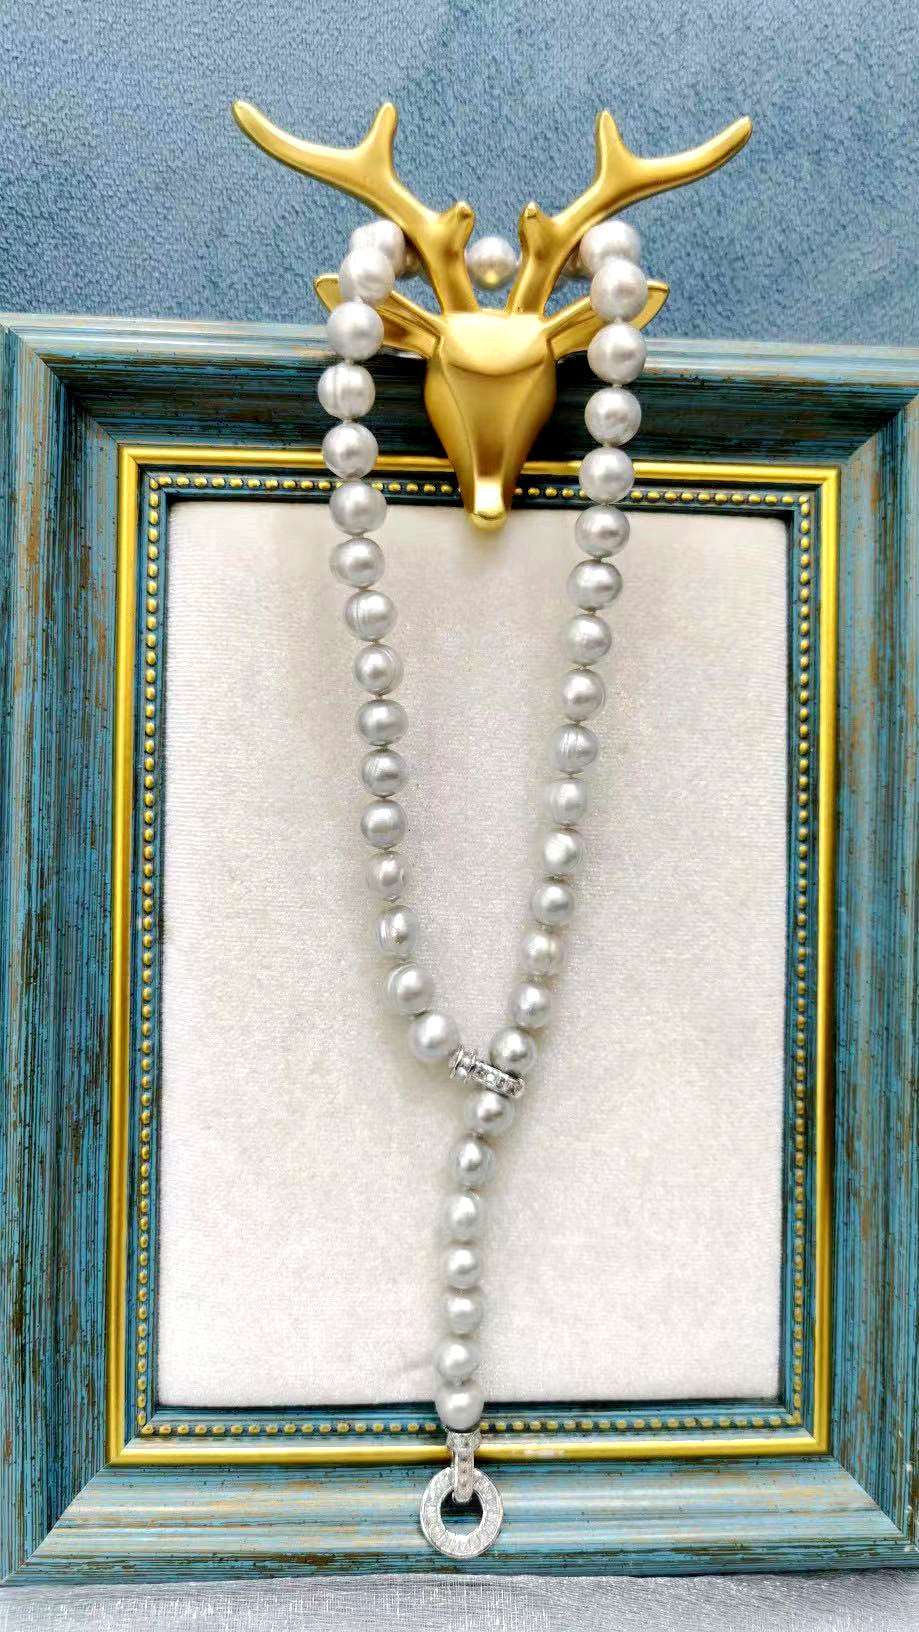 Unique Gray Pearl Necklace